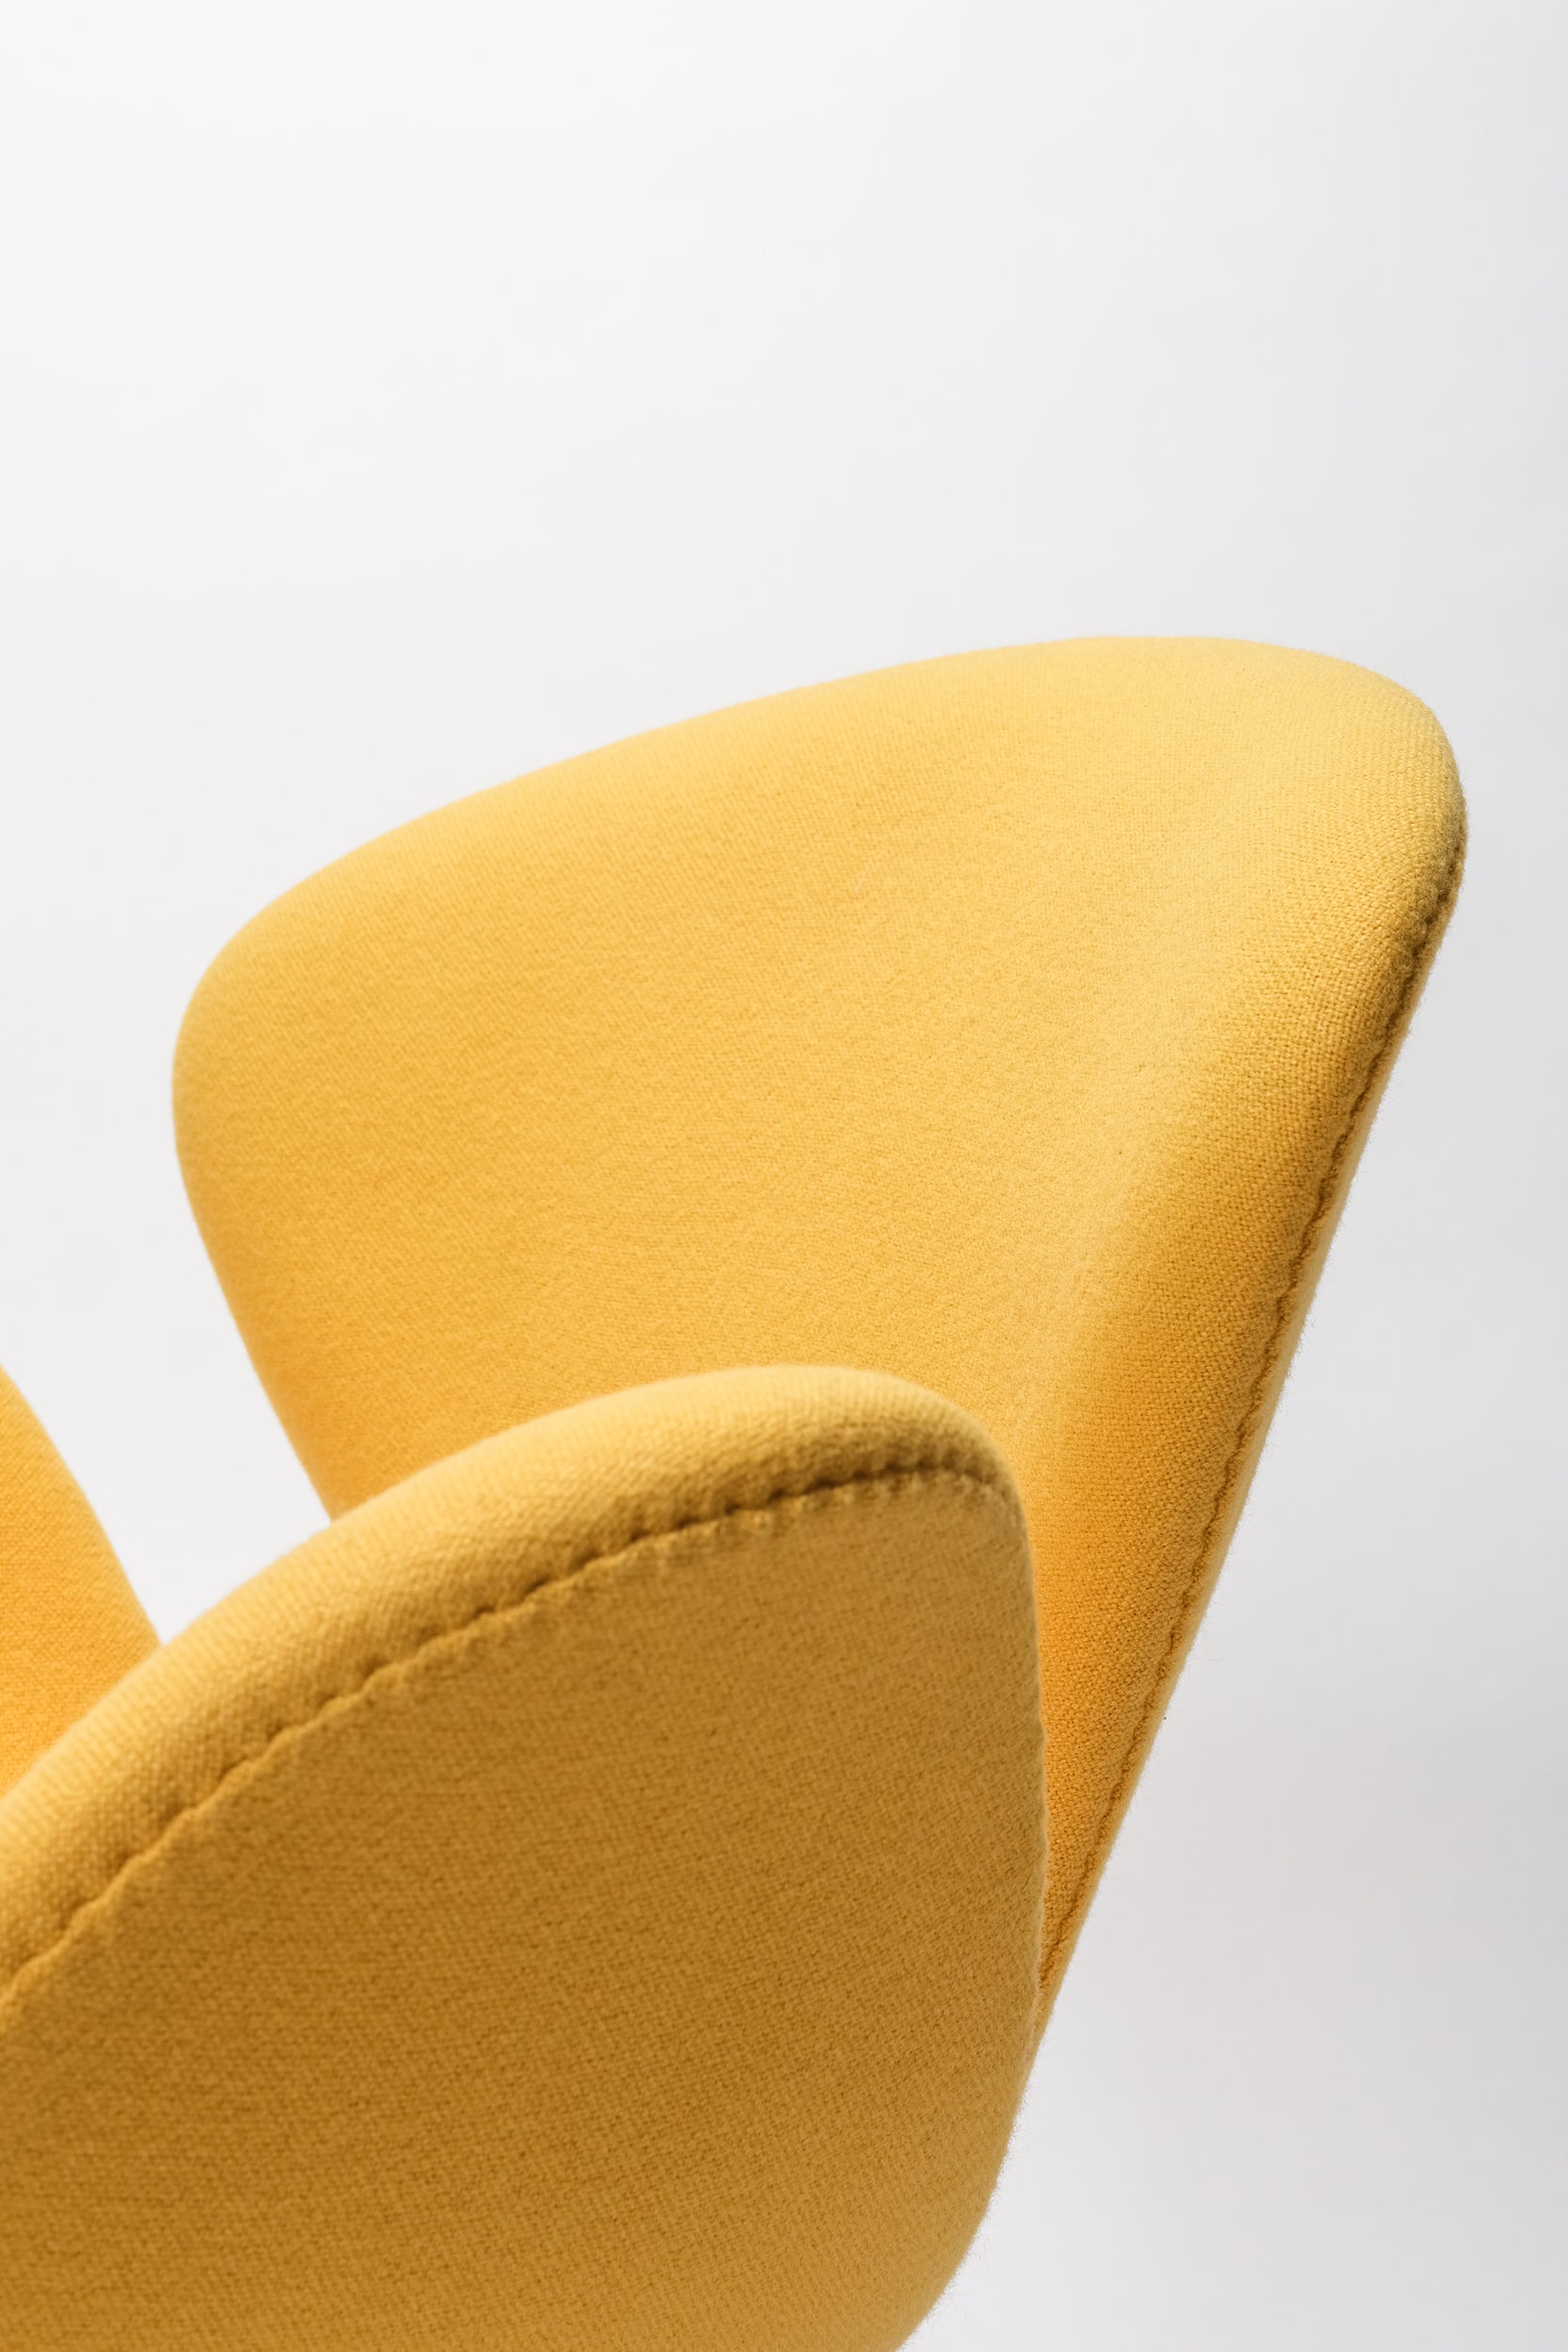 Arne Jacobsen Swan Chair, Fritz Hansen, 60s